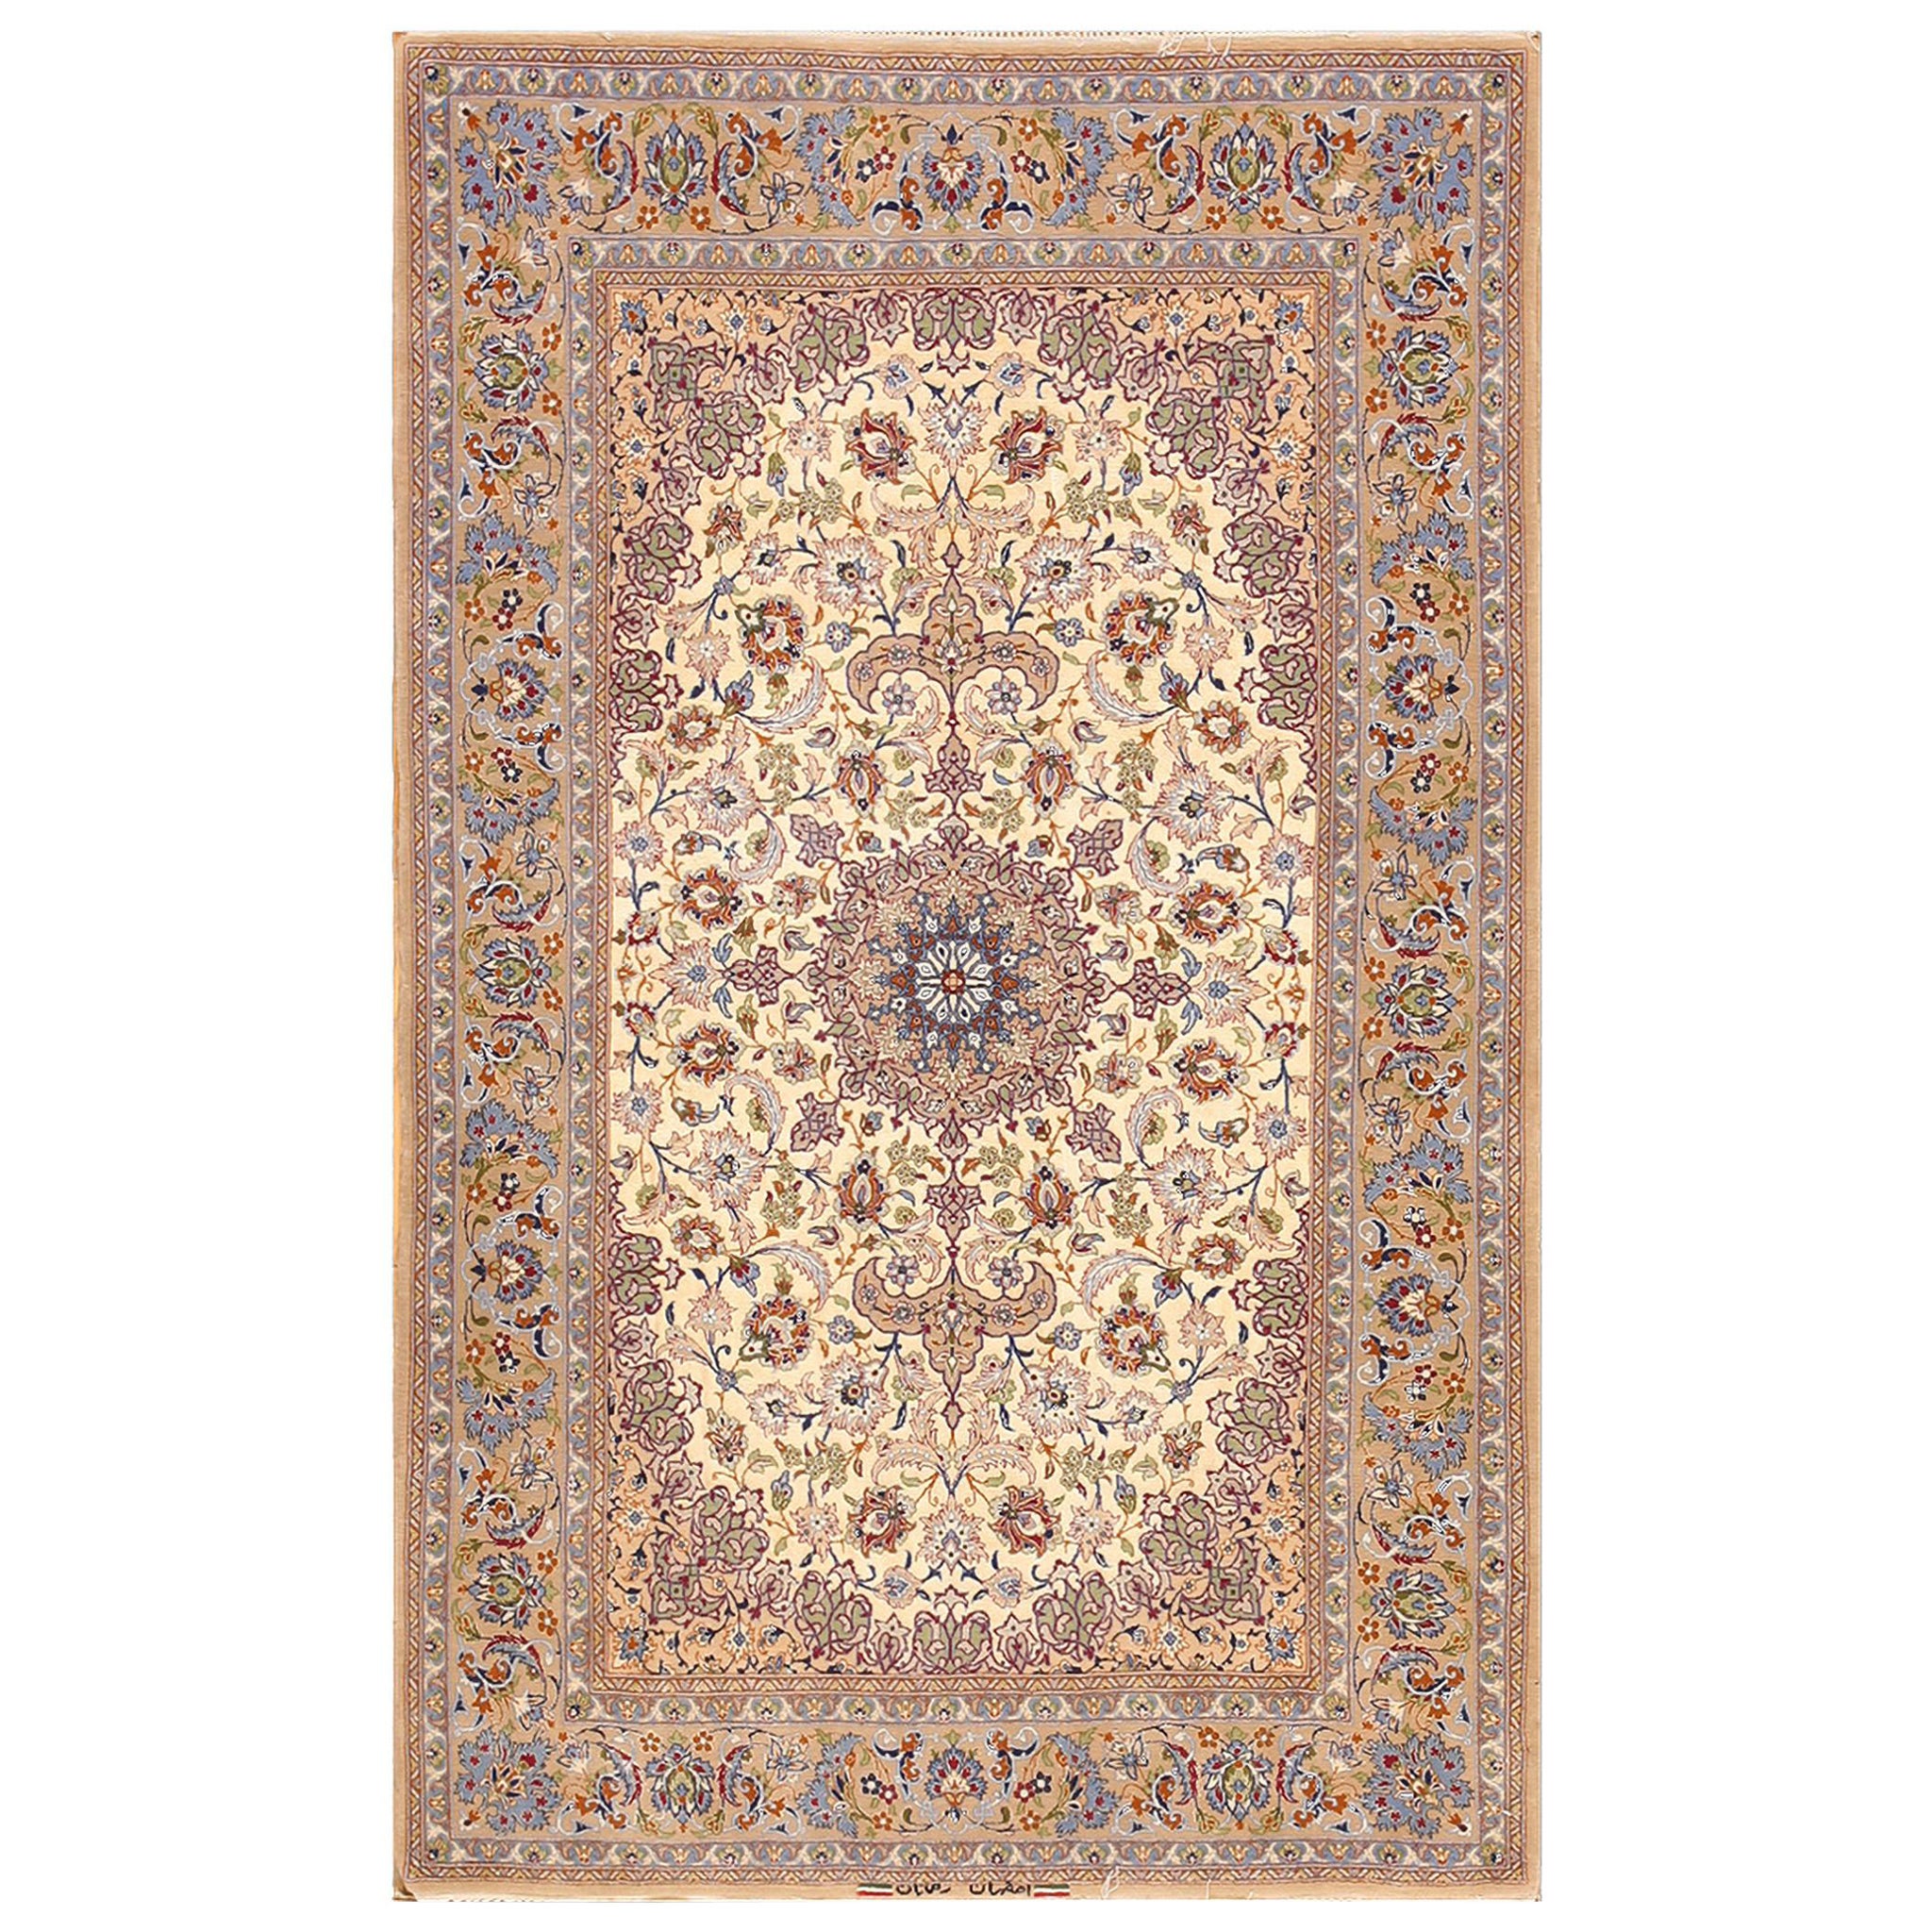 Mid 20th Century Persian Isfahan Carpet ( 3' 7" x 5' 7" - 109 x 170 cm )